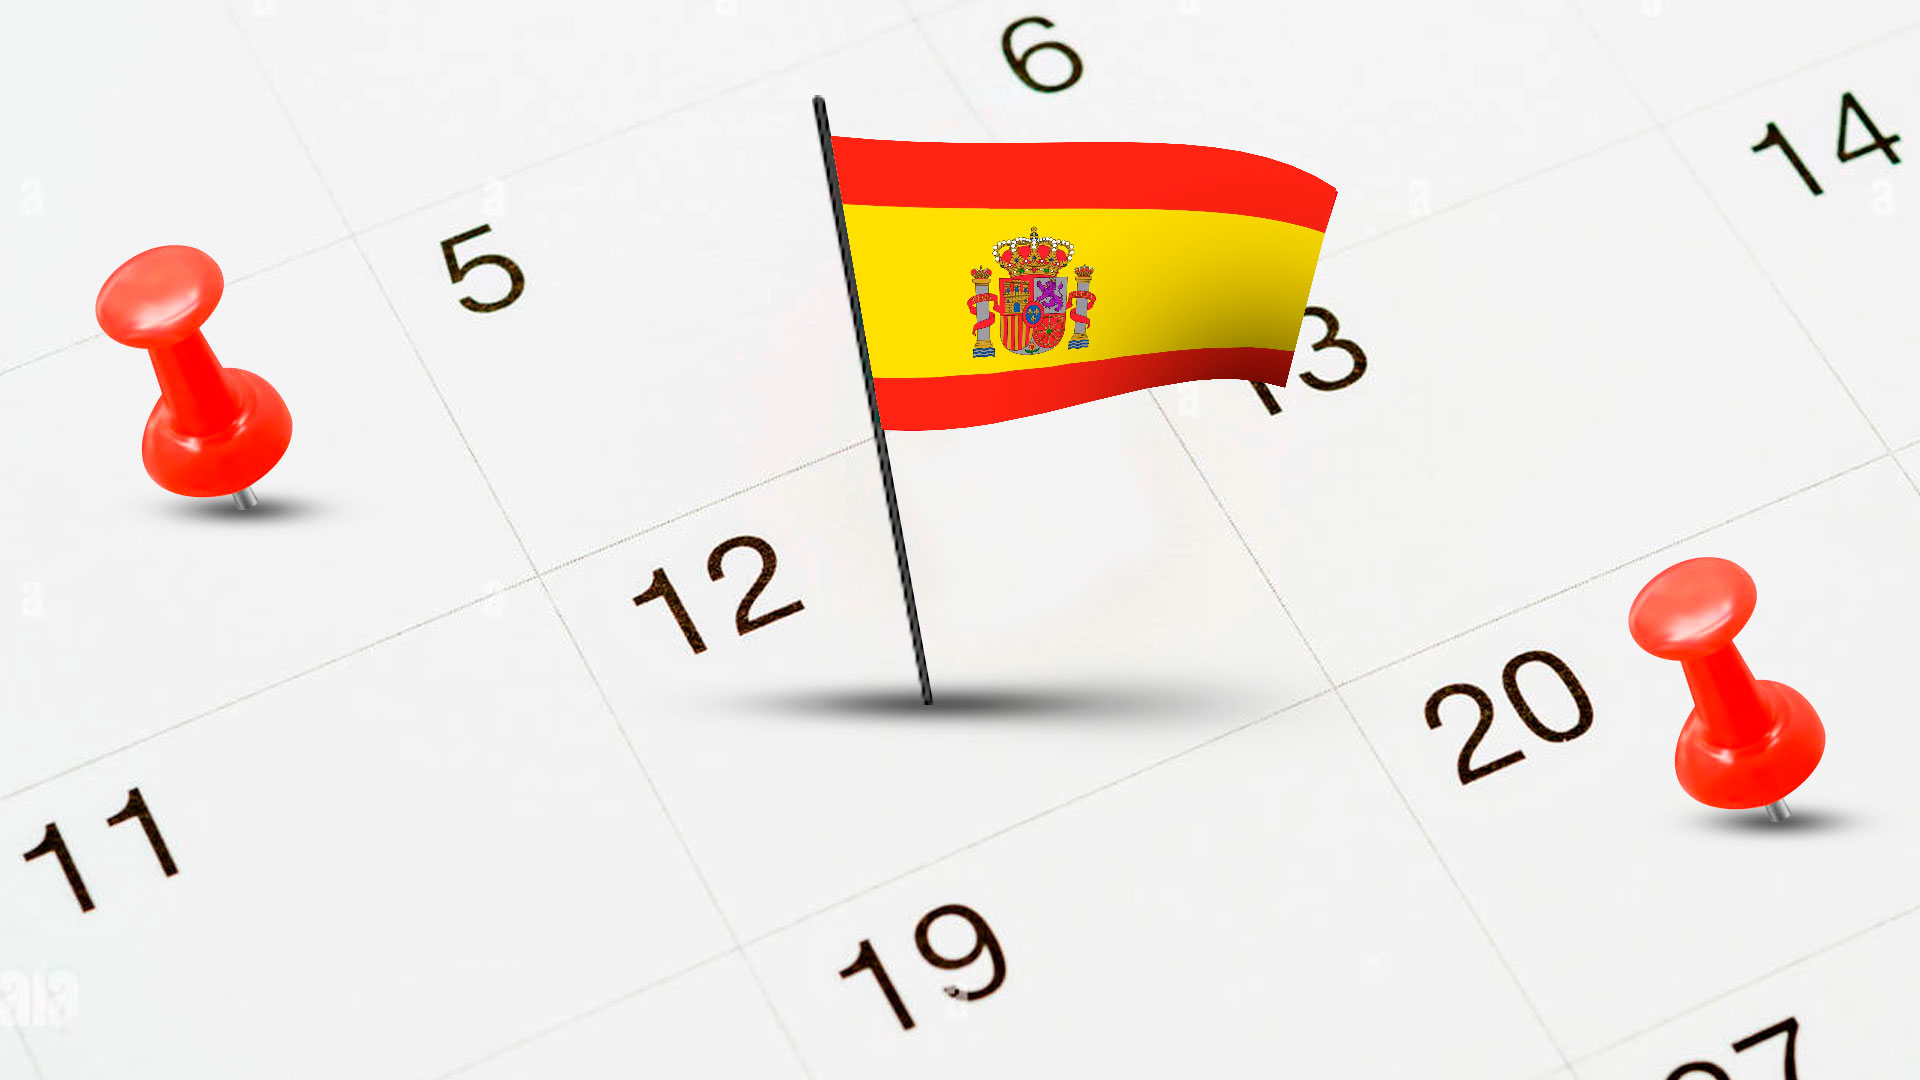 Efemérides de España, las fechas importantes de abril